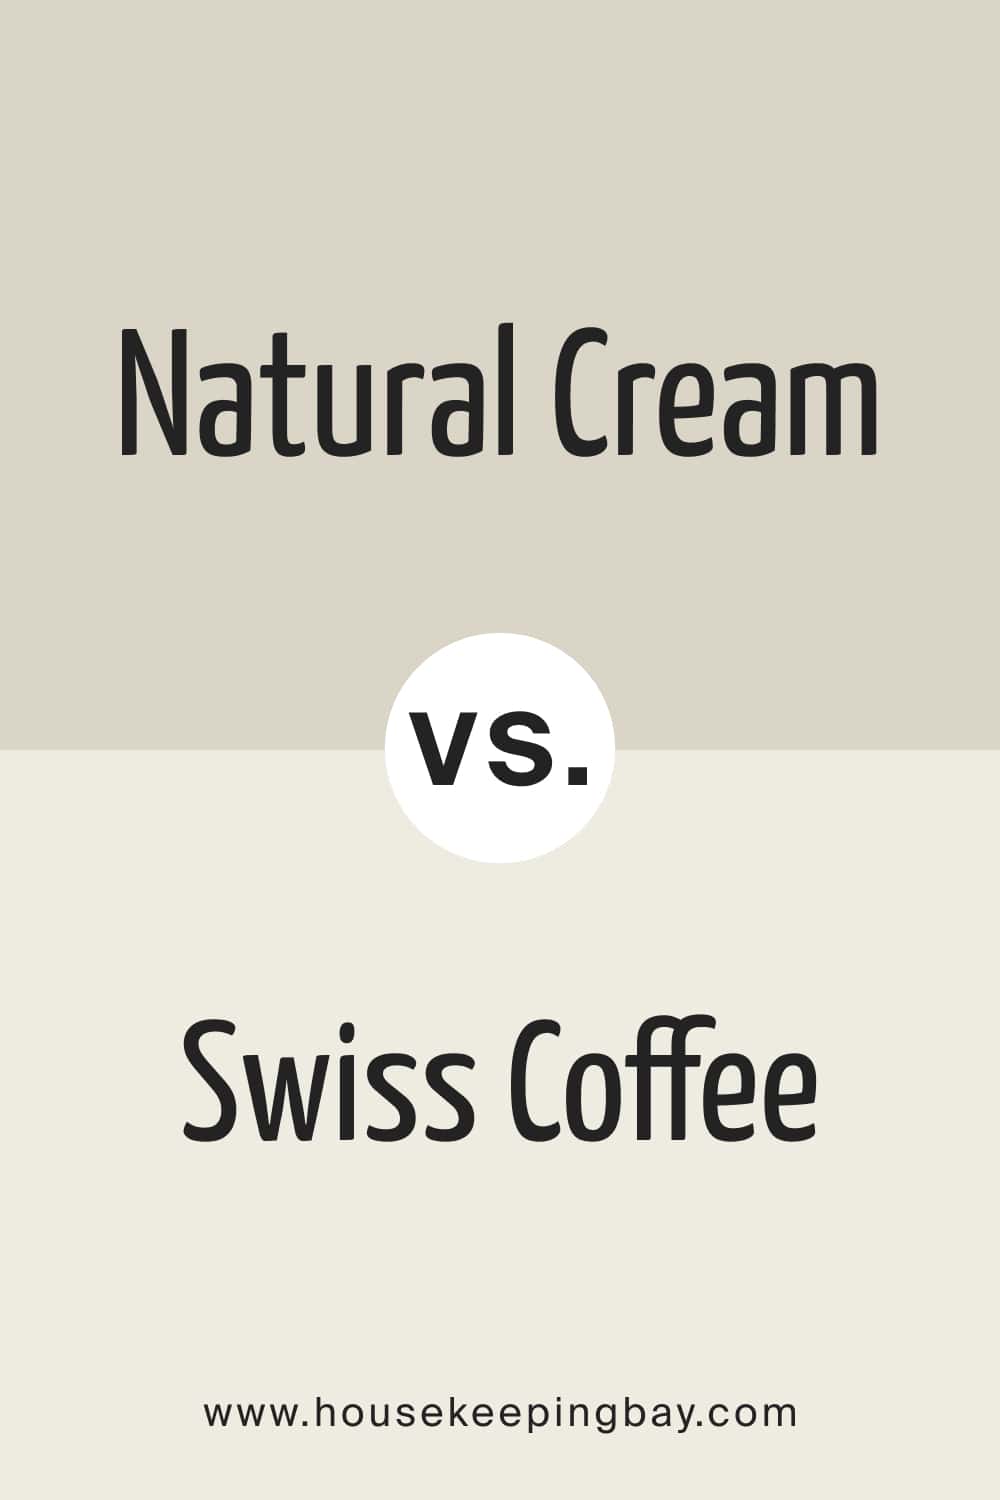 Natural Cream vs Swiss Coffee